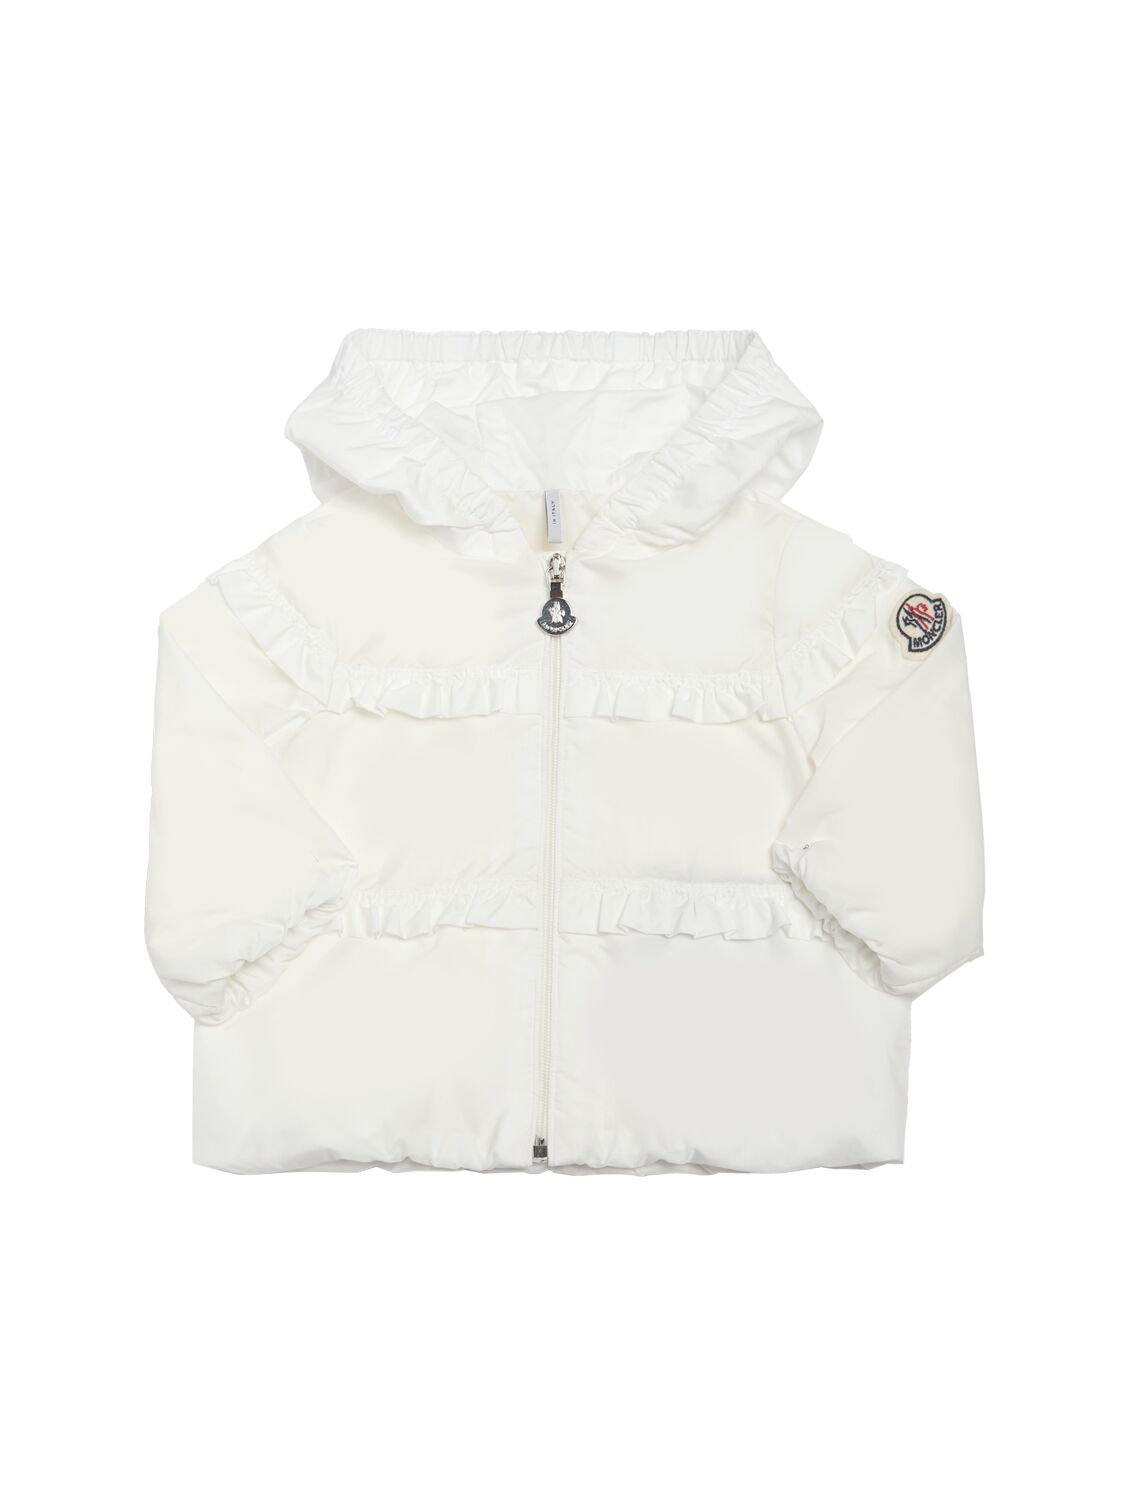 Image of Hiti Nylon Rainwear Jacket